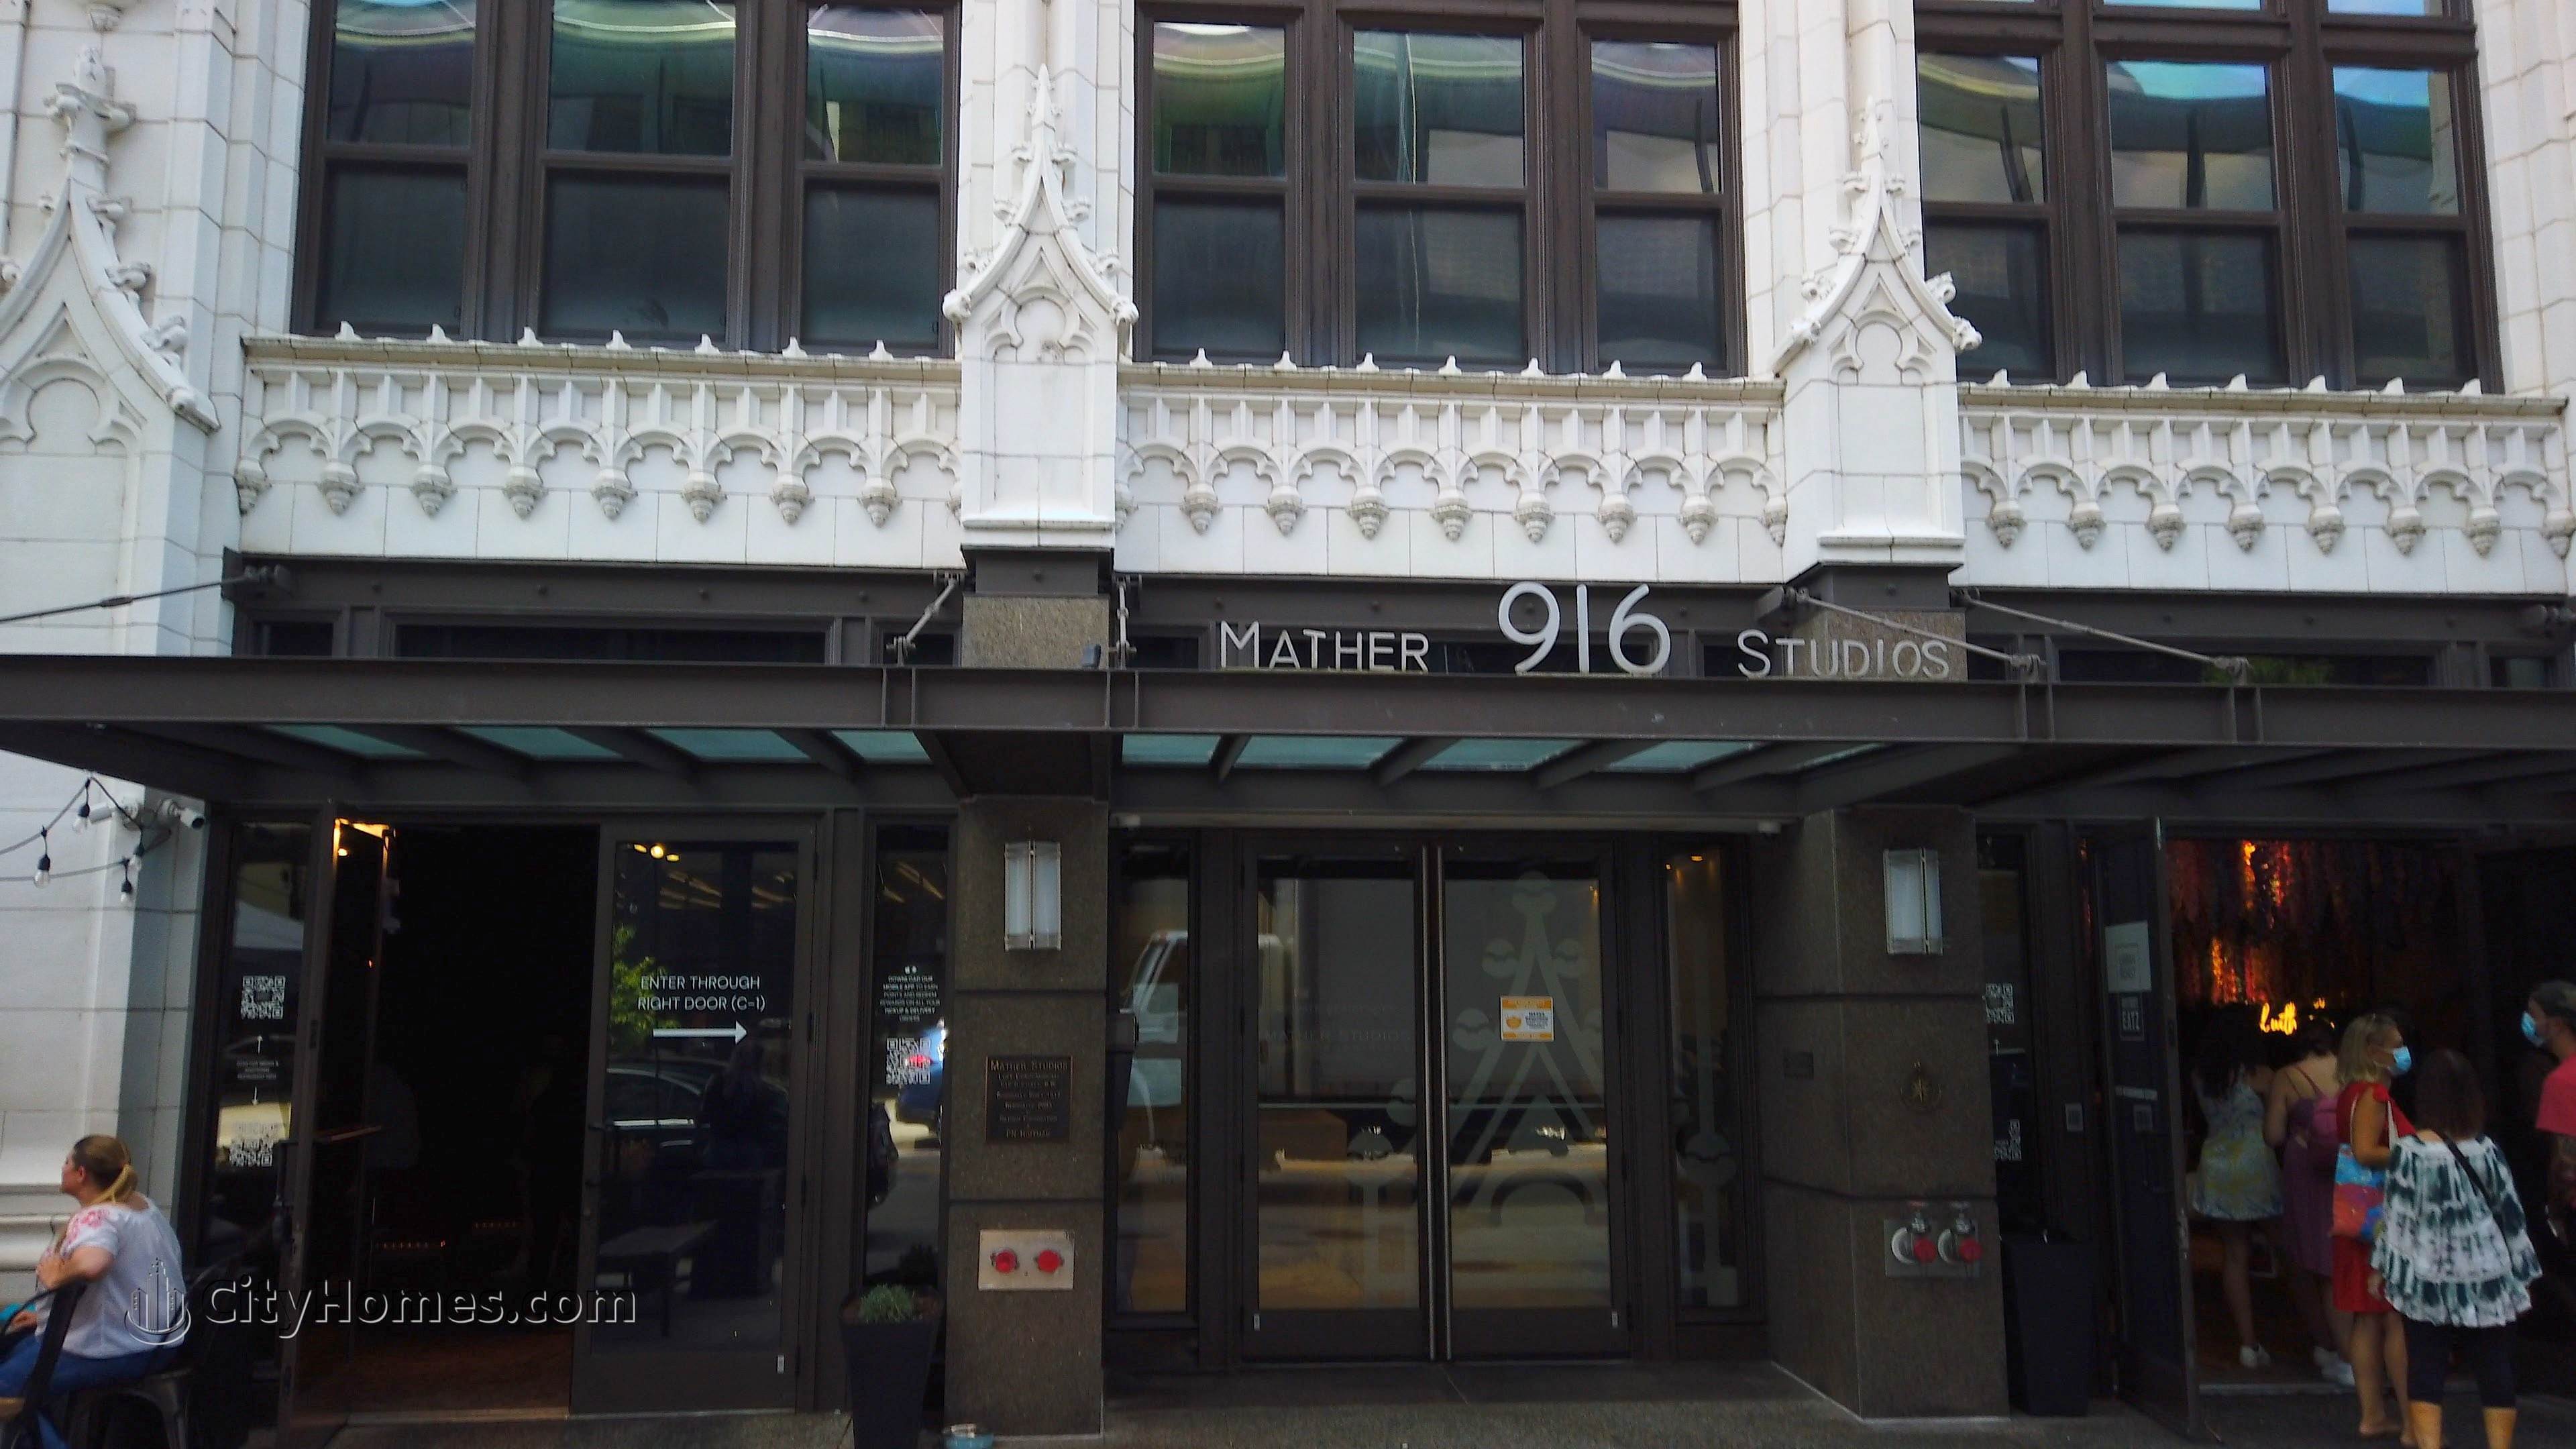 Mather Studios building at 916 G St NW, Penn Quarter, Washington, DC 20001